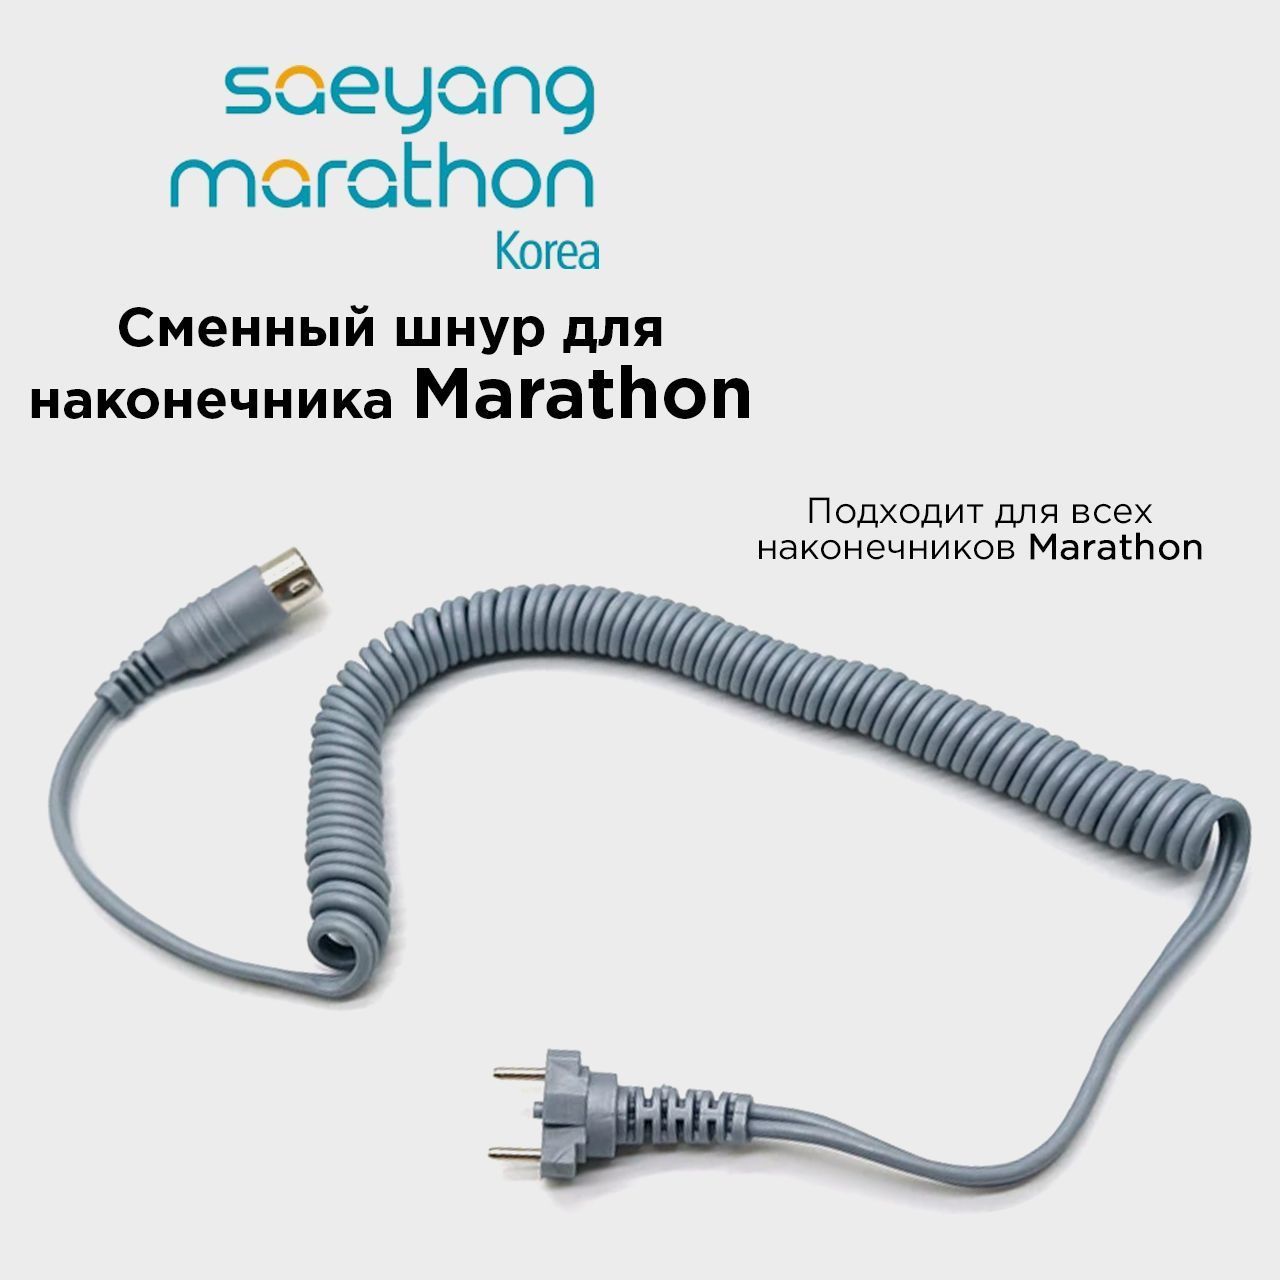 Провод для микромотора Marathon шнур для ручки наконечника Маратон Серый кабель шнур для ручки микромотора marathon 6 мм